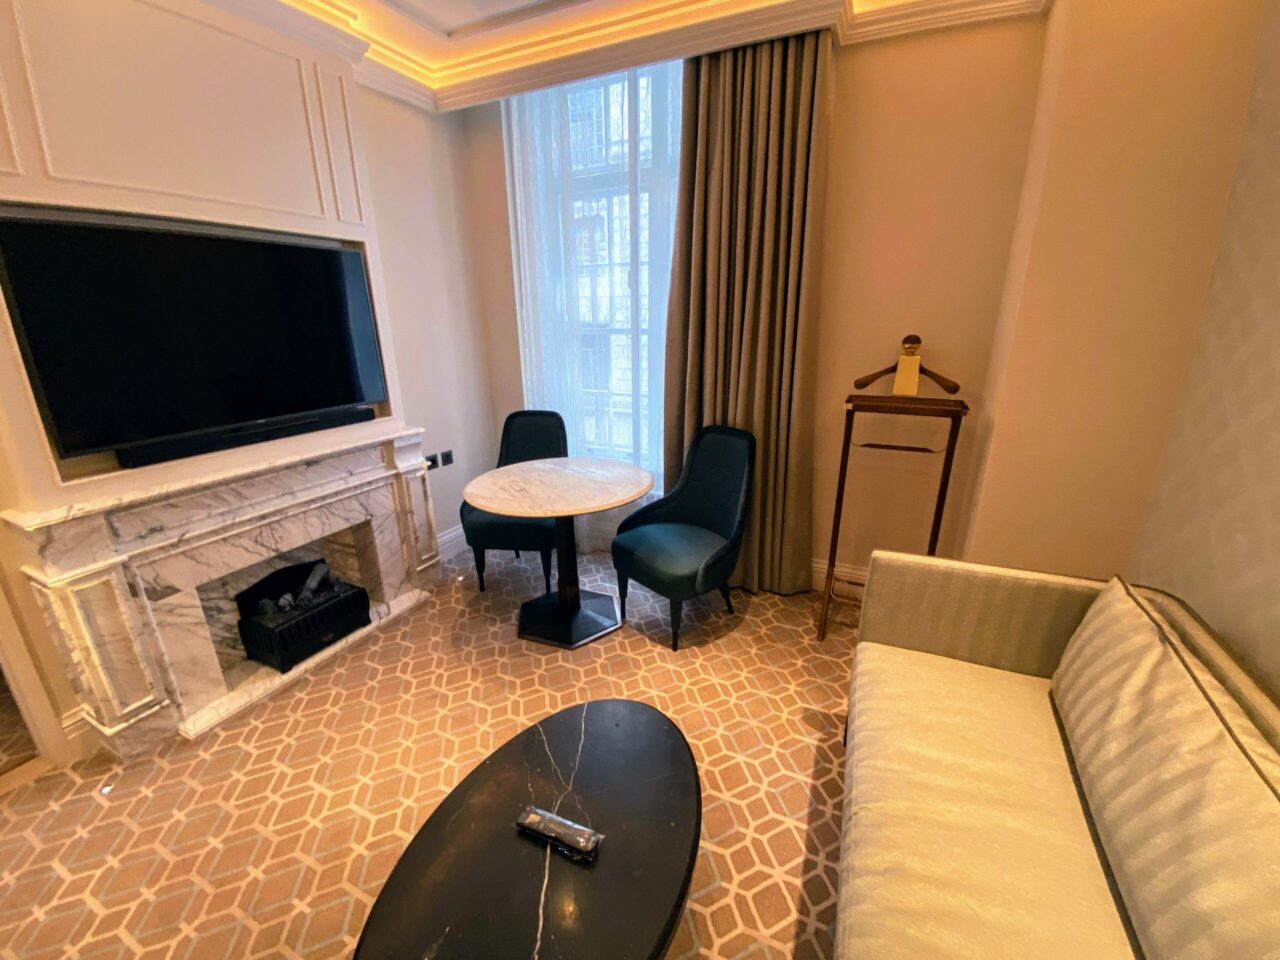 Sherlock Suite living room at Great Scotland Yard Hotel London 